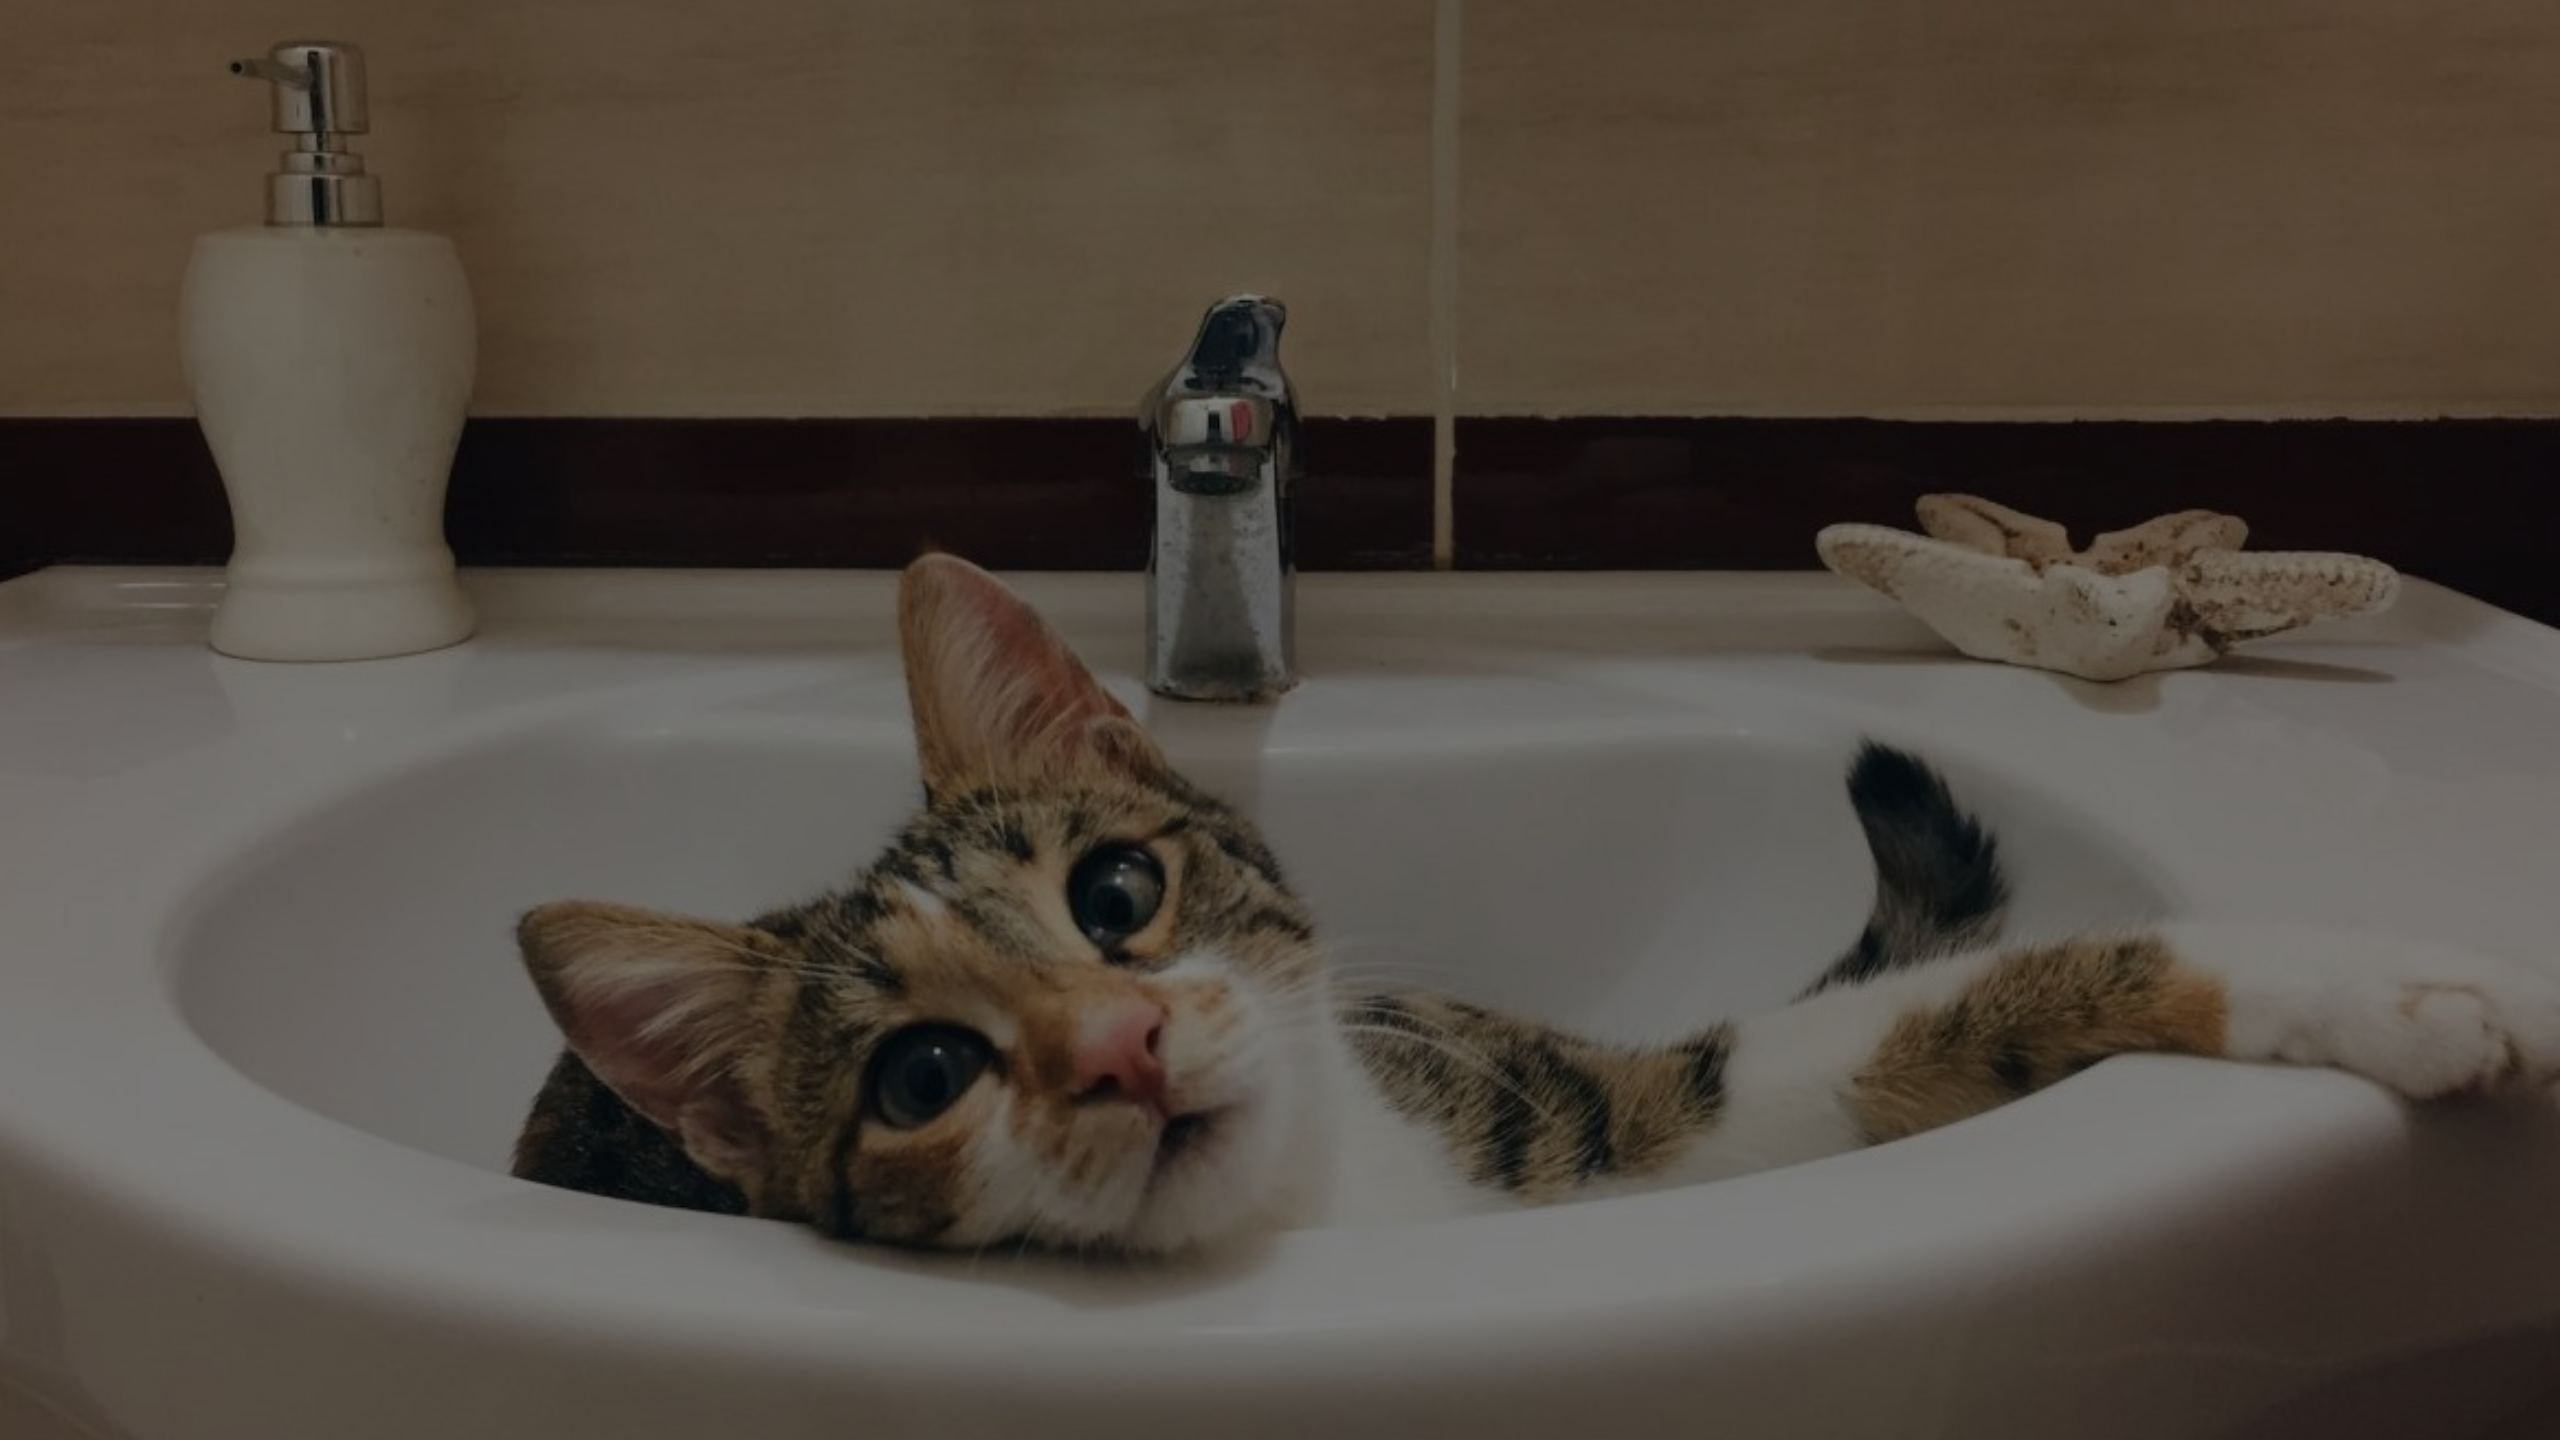 Locking Cat in Bathroom at Night Featured Images